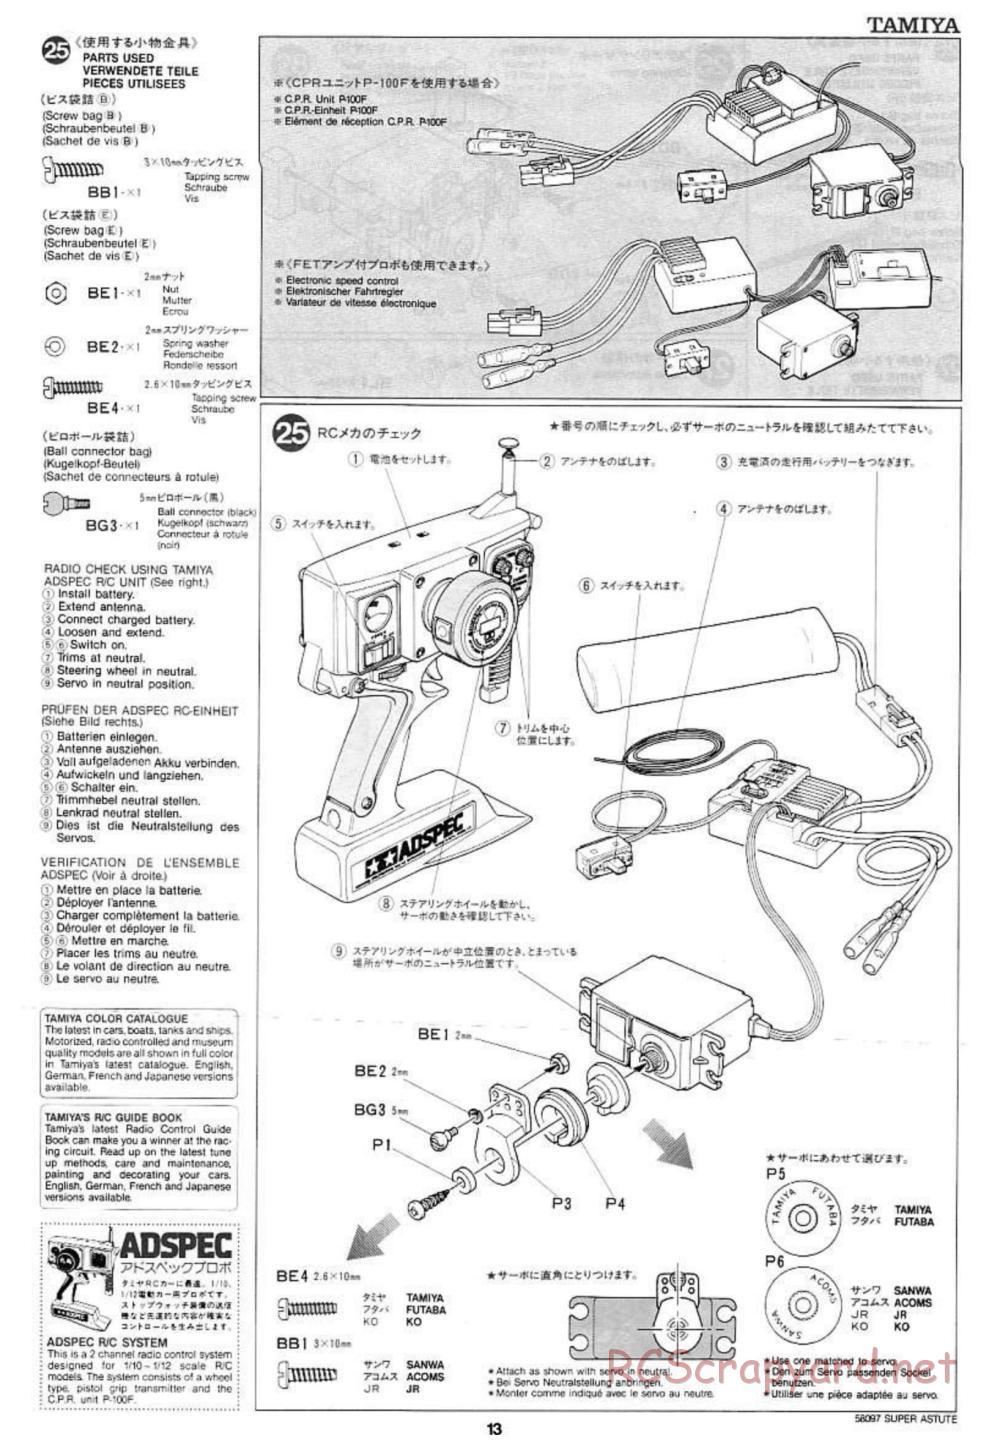 Tamiya - Super Astute - 58097 - Manual - Page 13